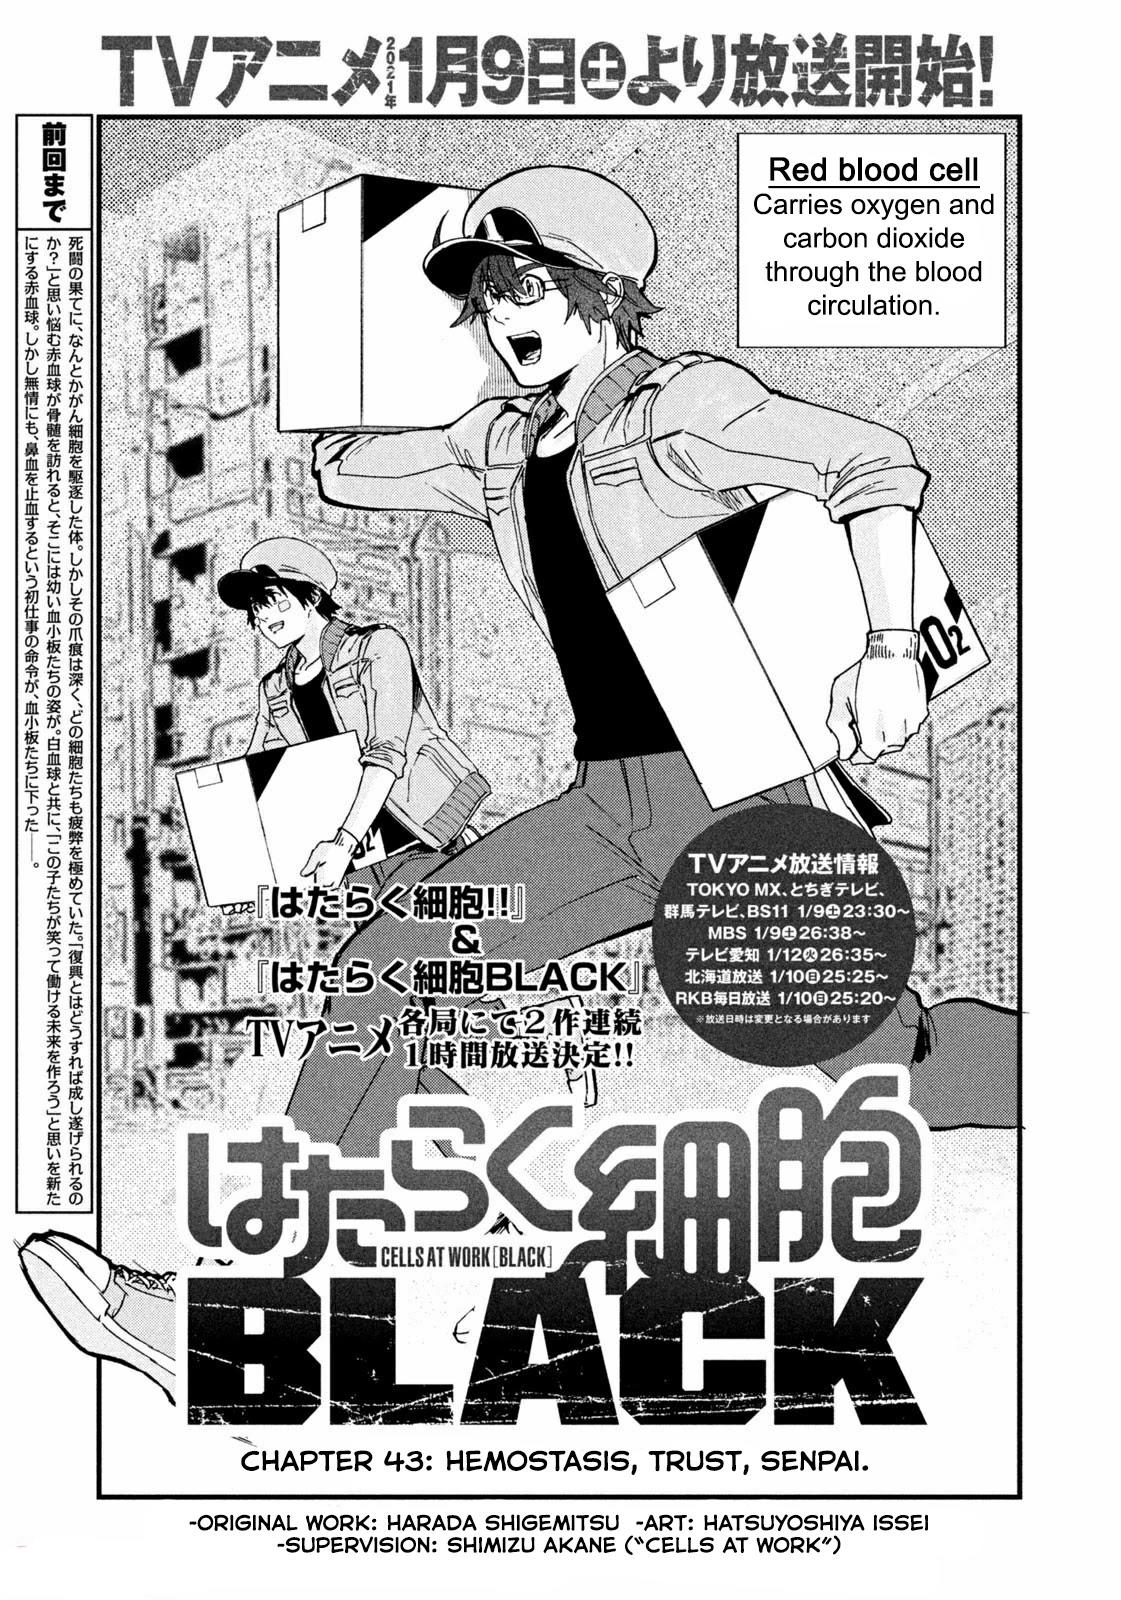 Hataraku Saibou' Manga Ends Next Chapter 